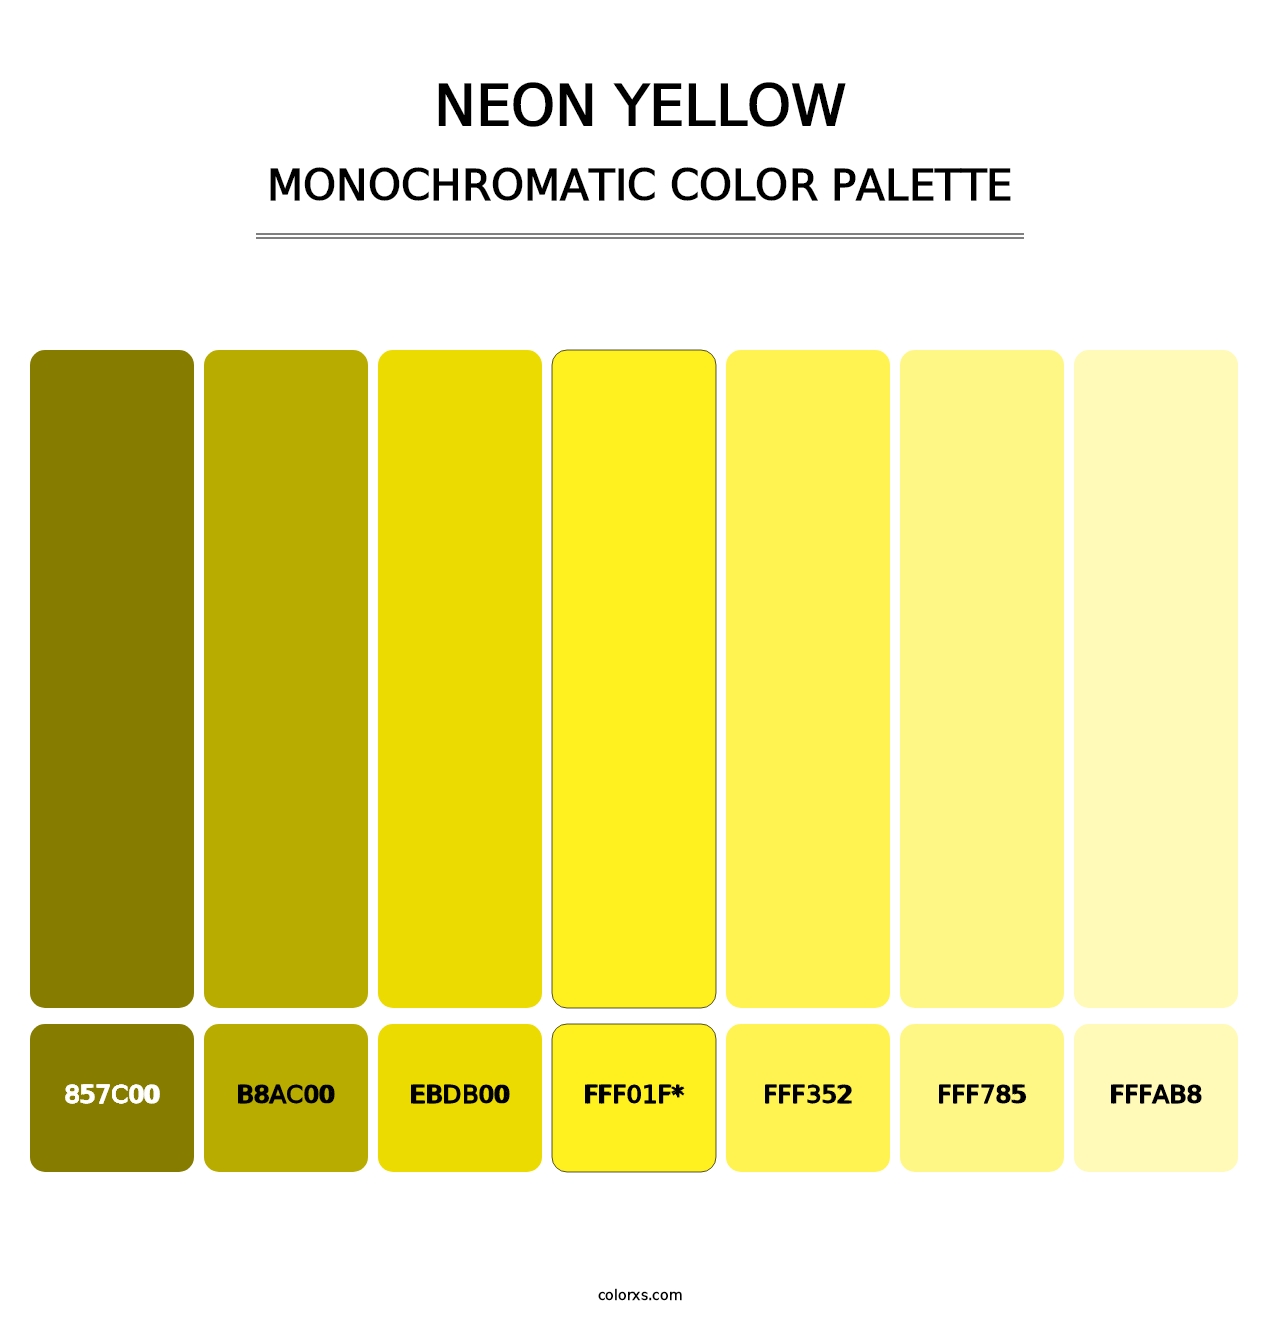 Neon Yellow - Monochromatic Color Palette